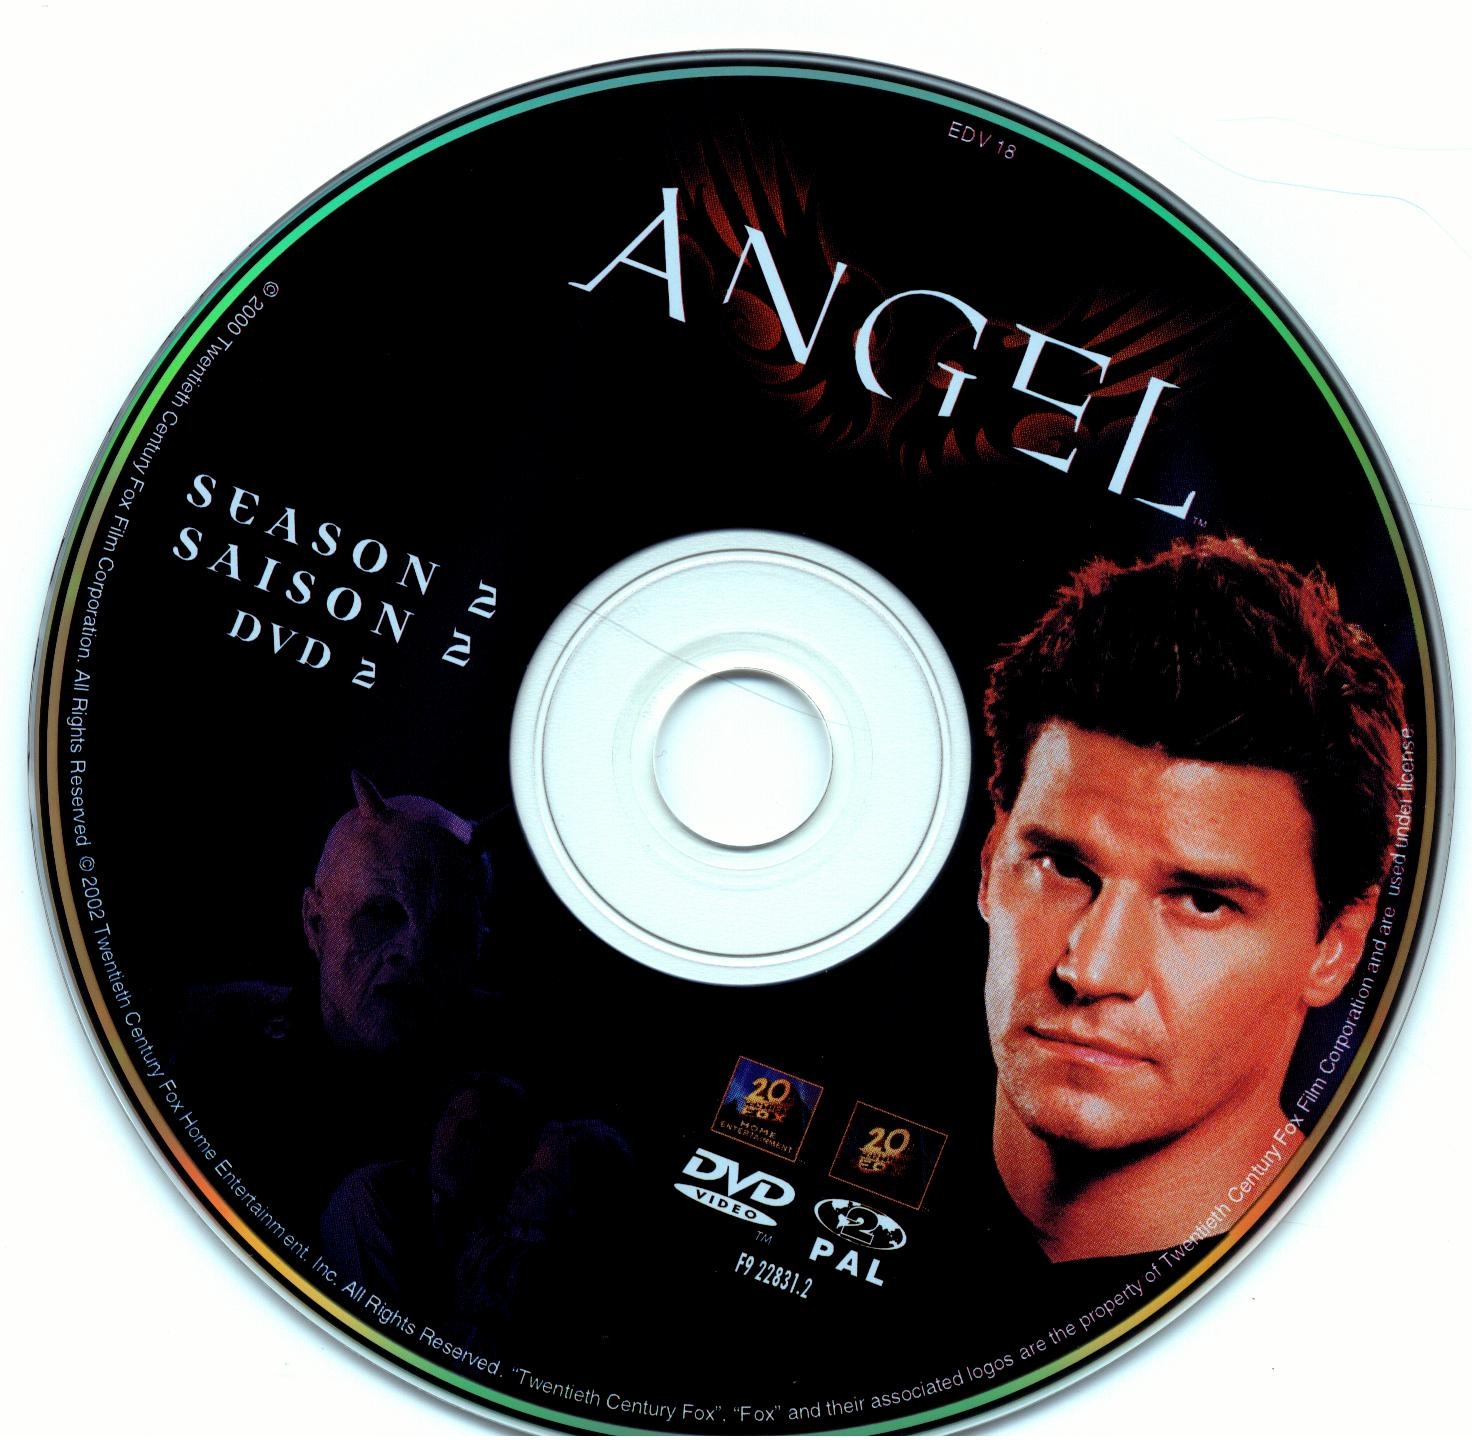 Angel Saison 2 dvd 2